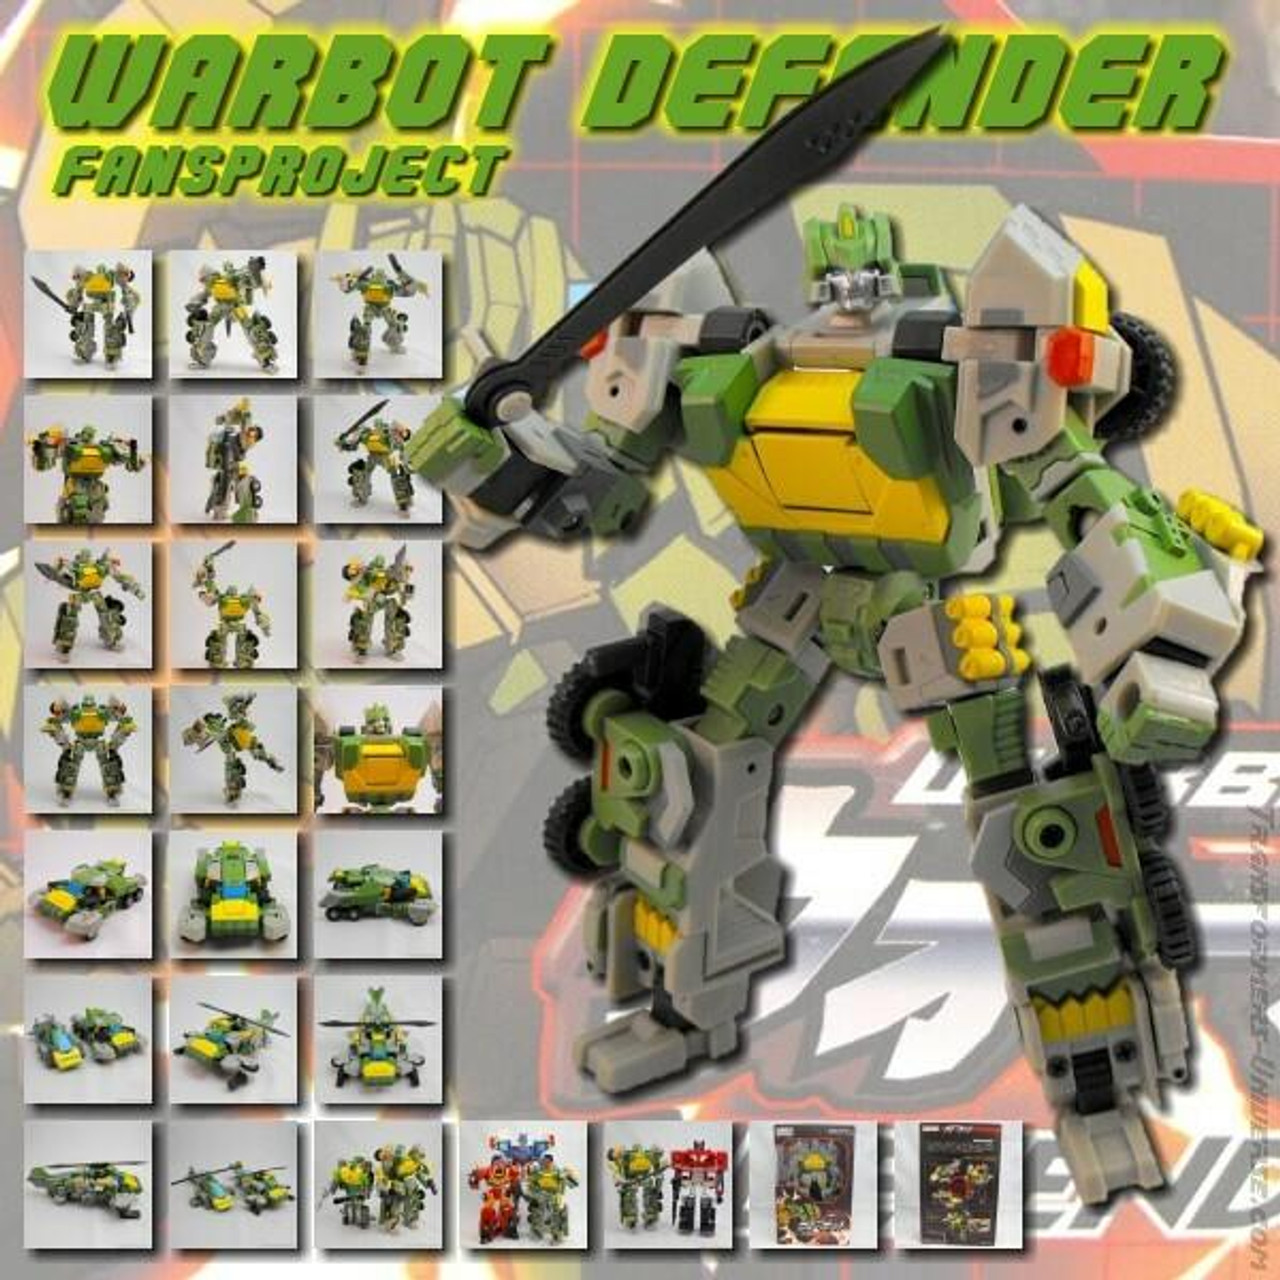 FansProject WB001 Warbot Defender Transforming Robot Action Figure